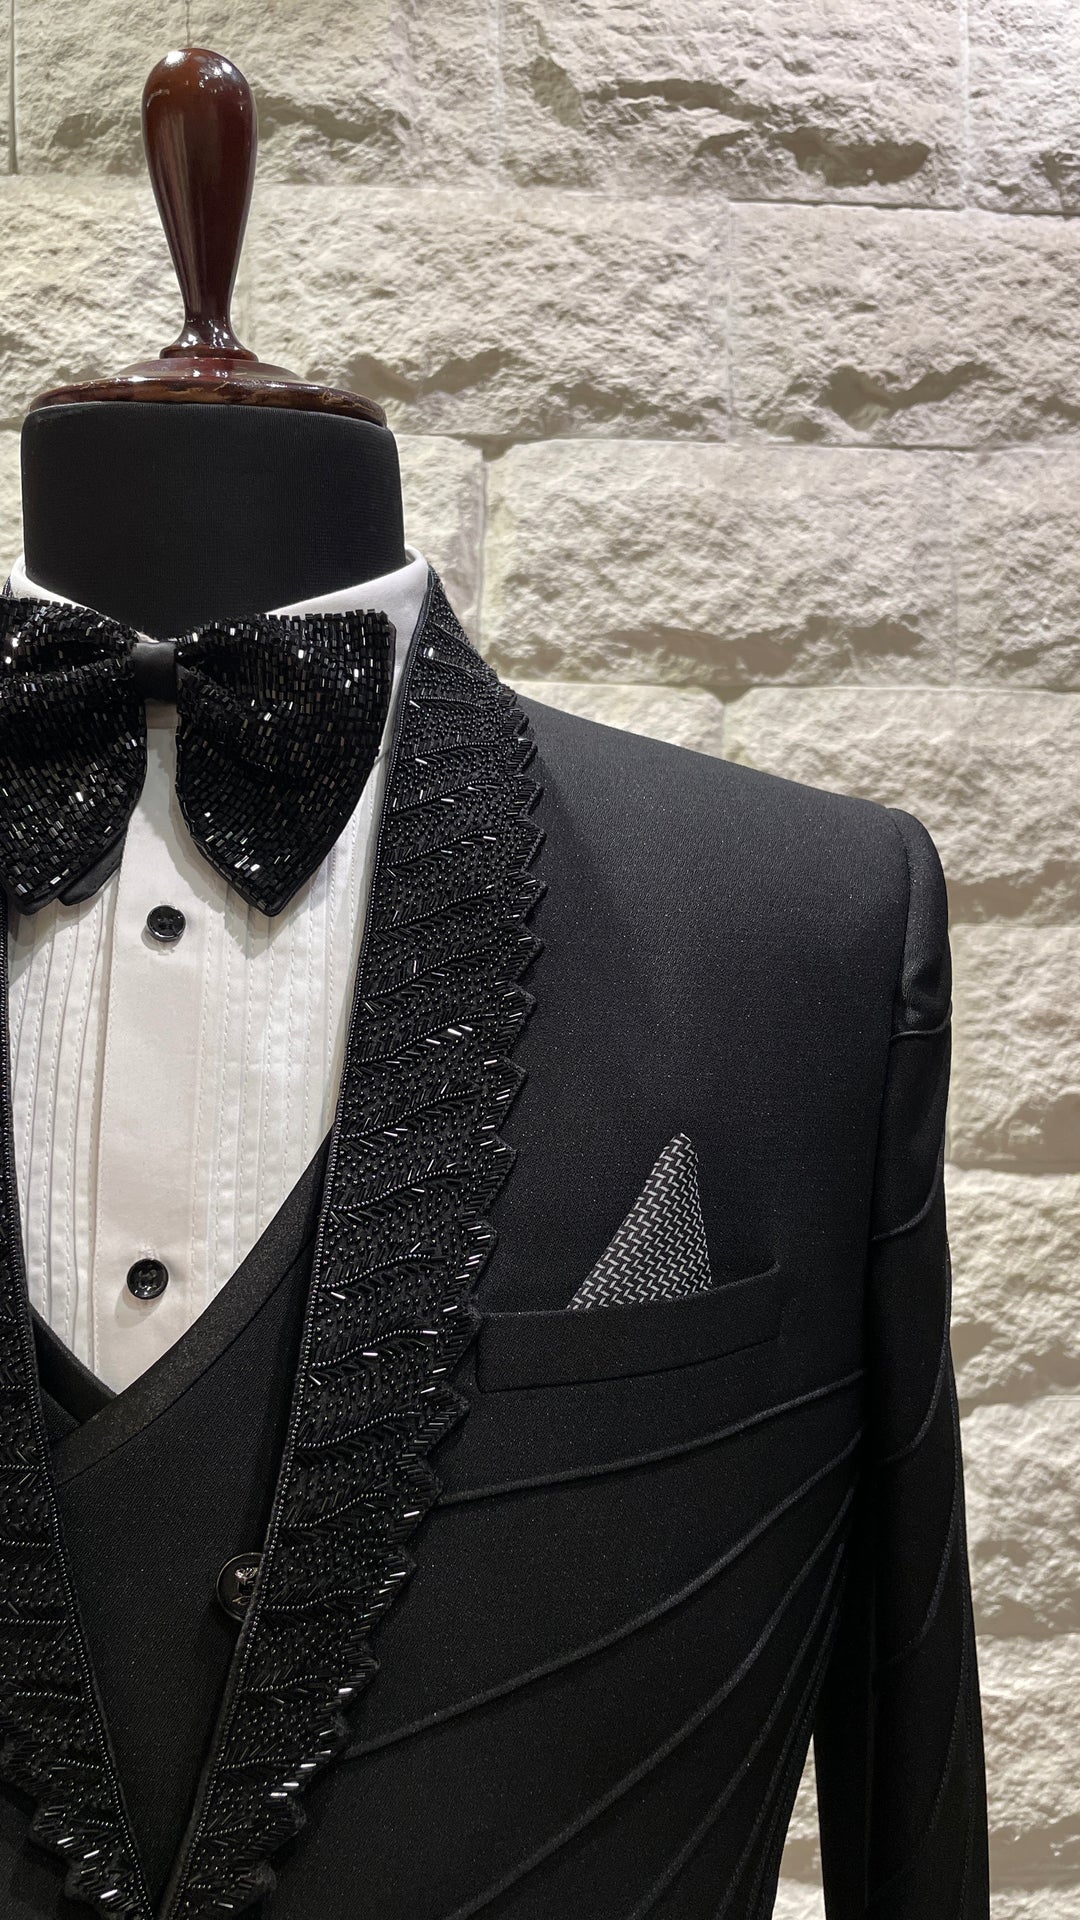 Black tuxedo with detailed collar